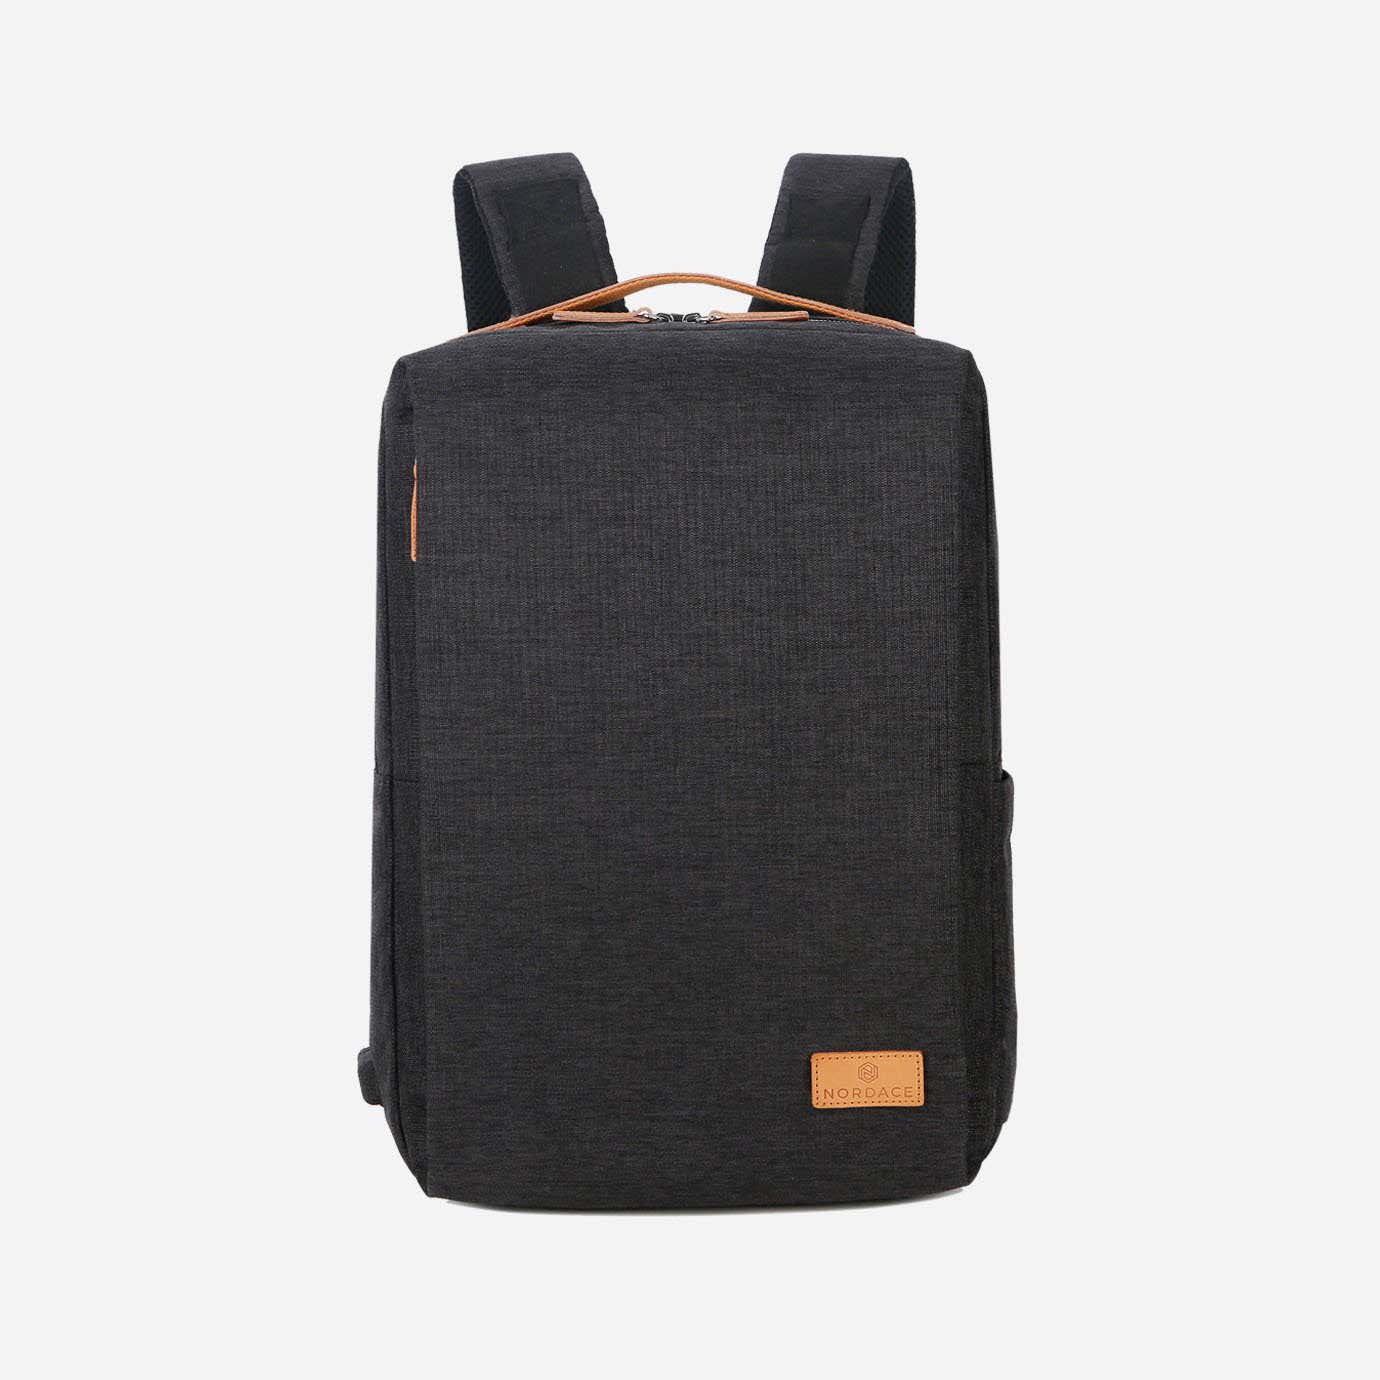 Nordace Siena smart modern square backpack in black 